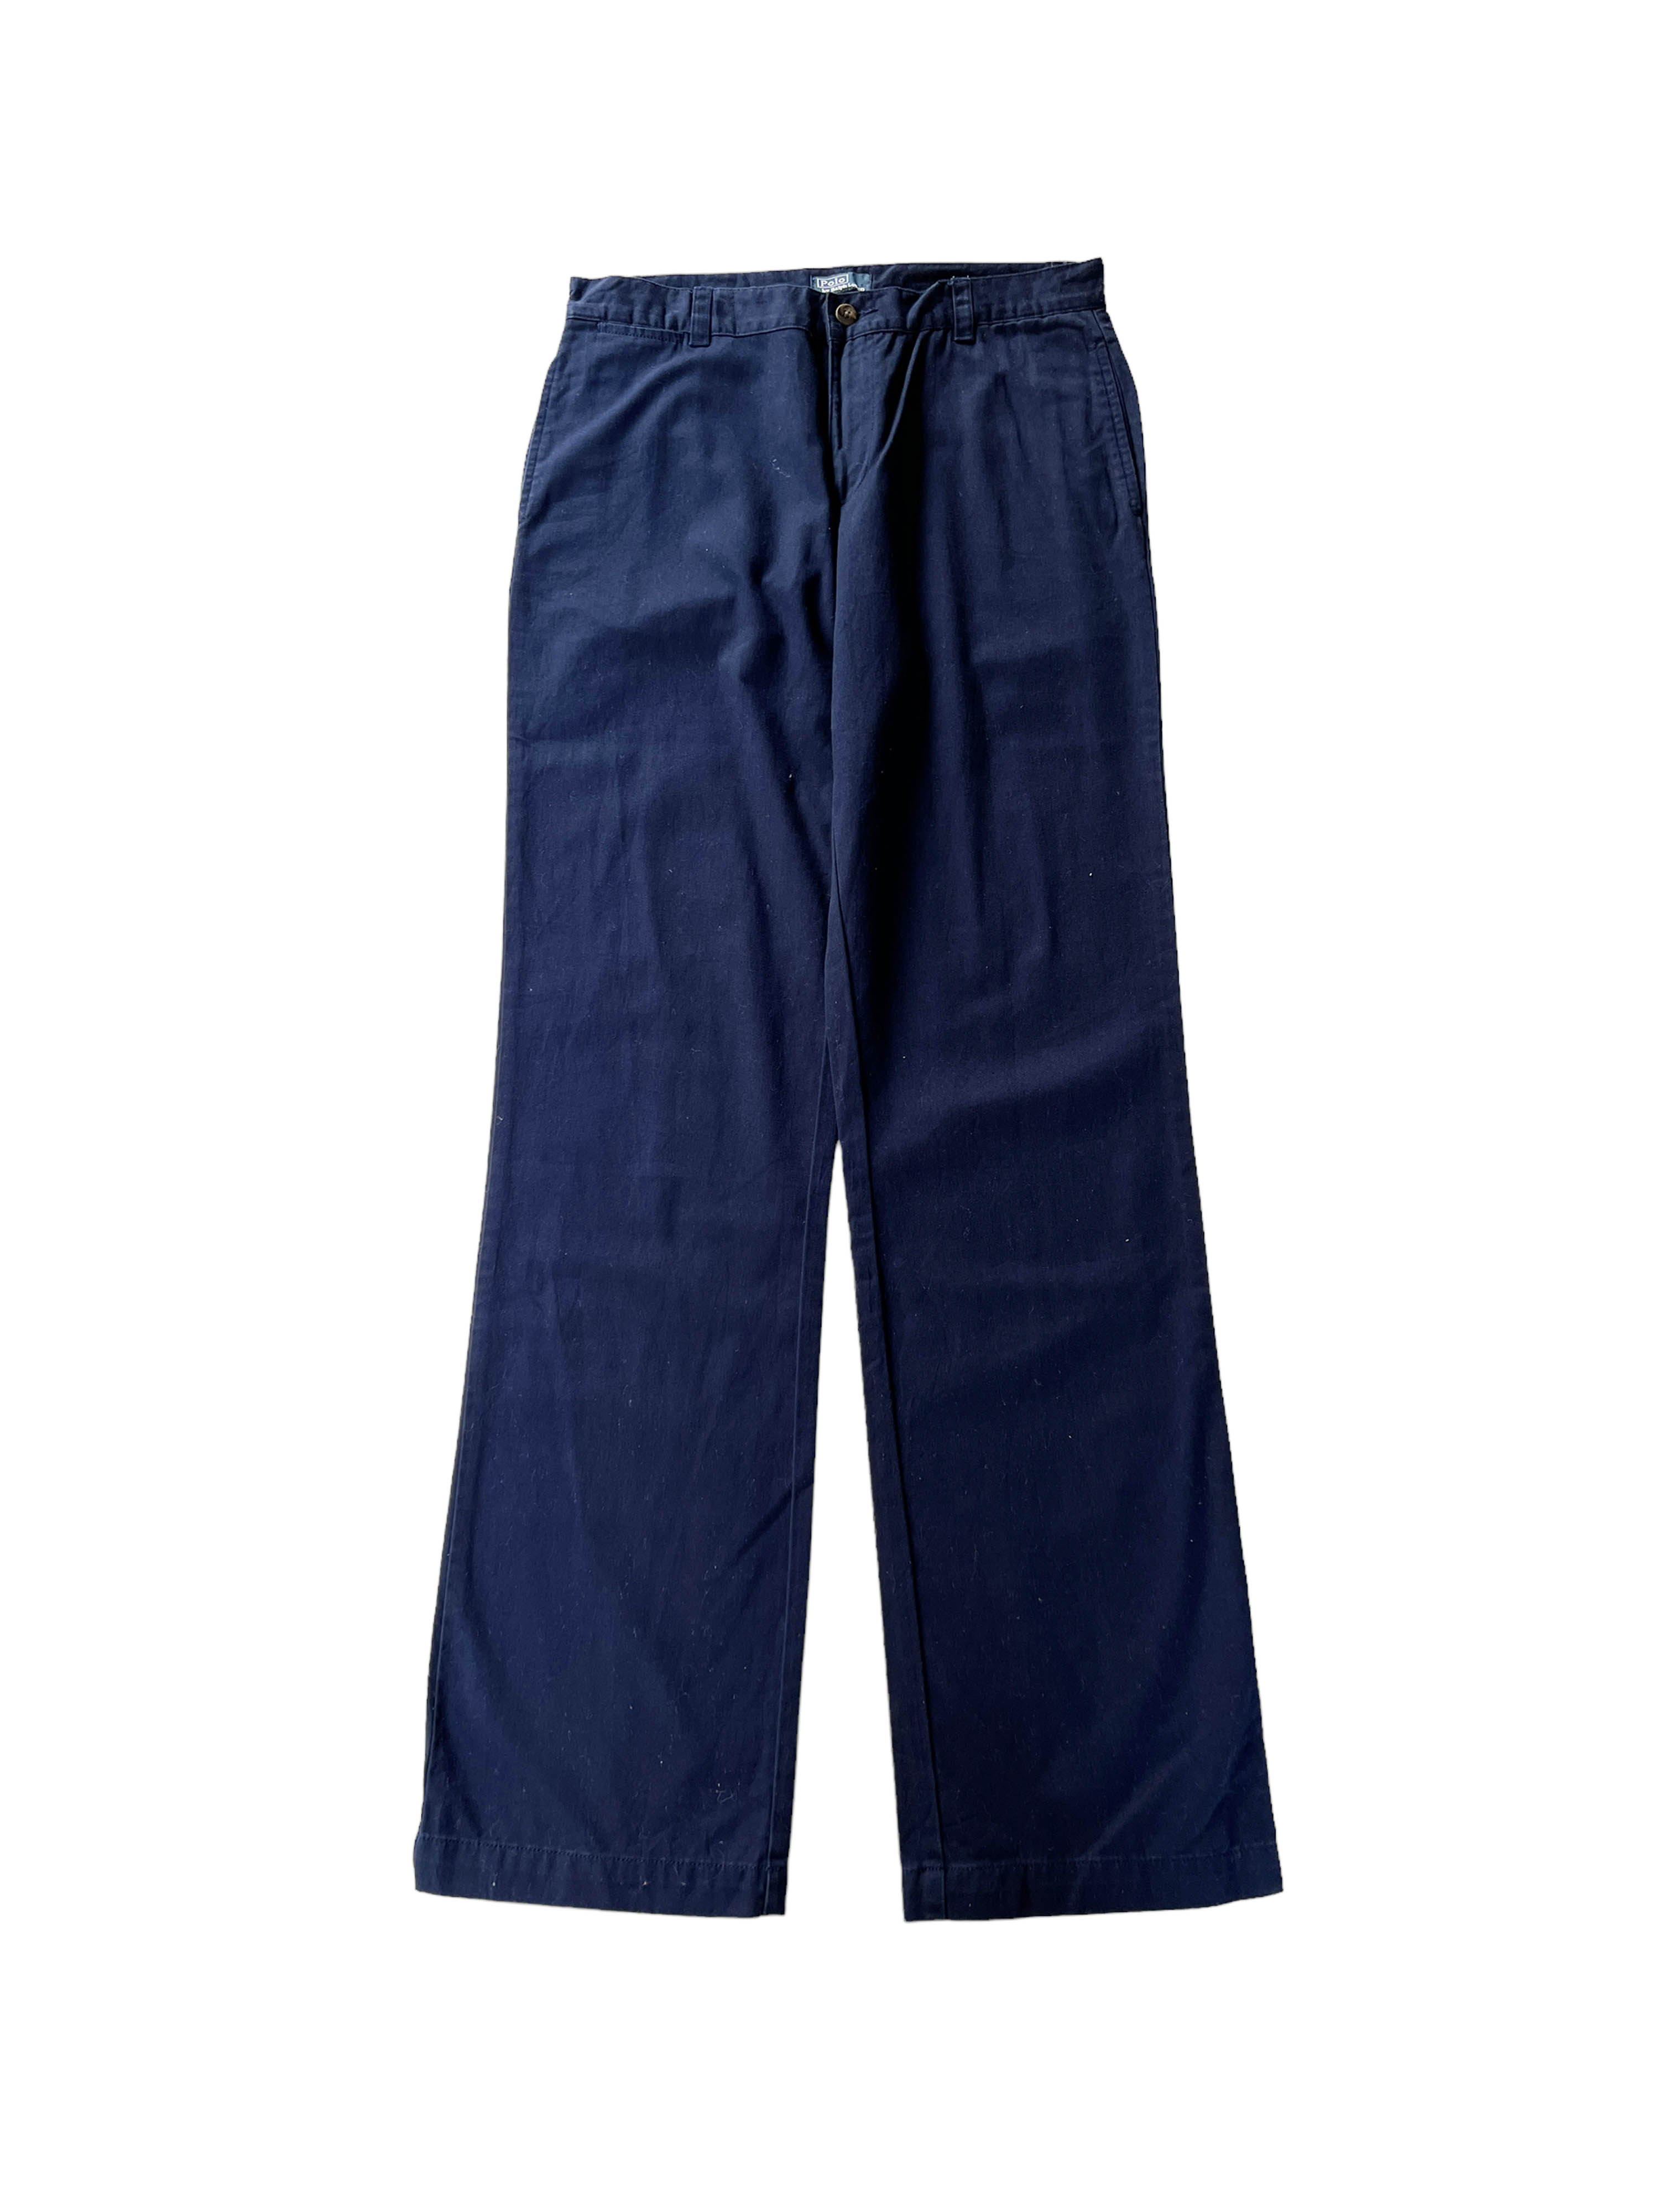 Polo Ralph Lauren navy chino pants